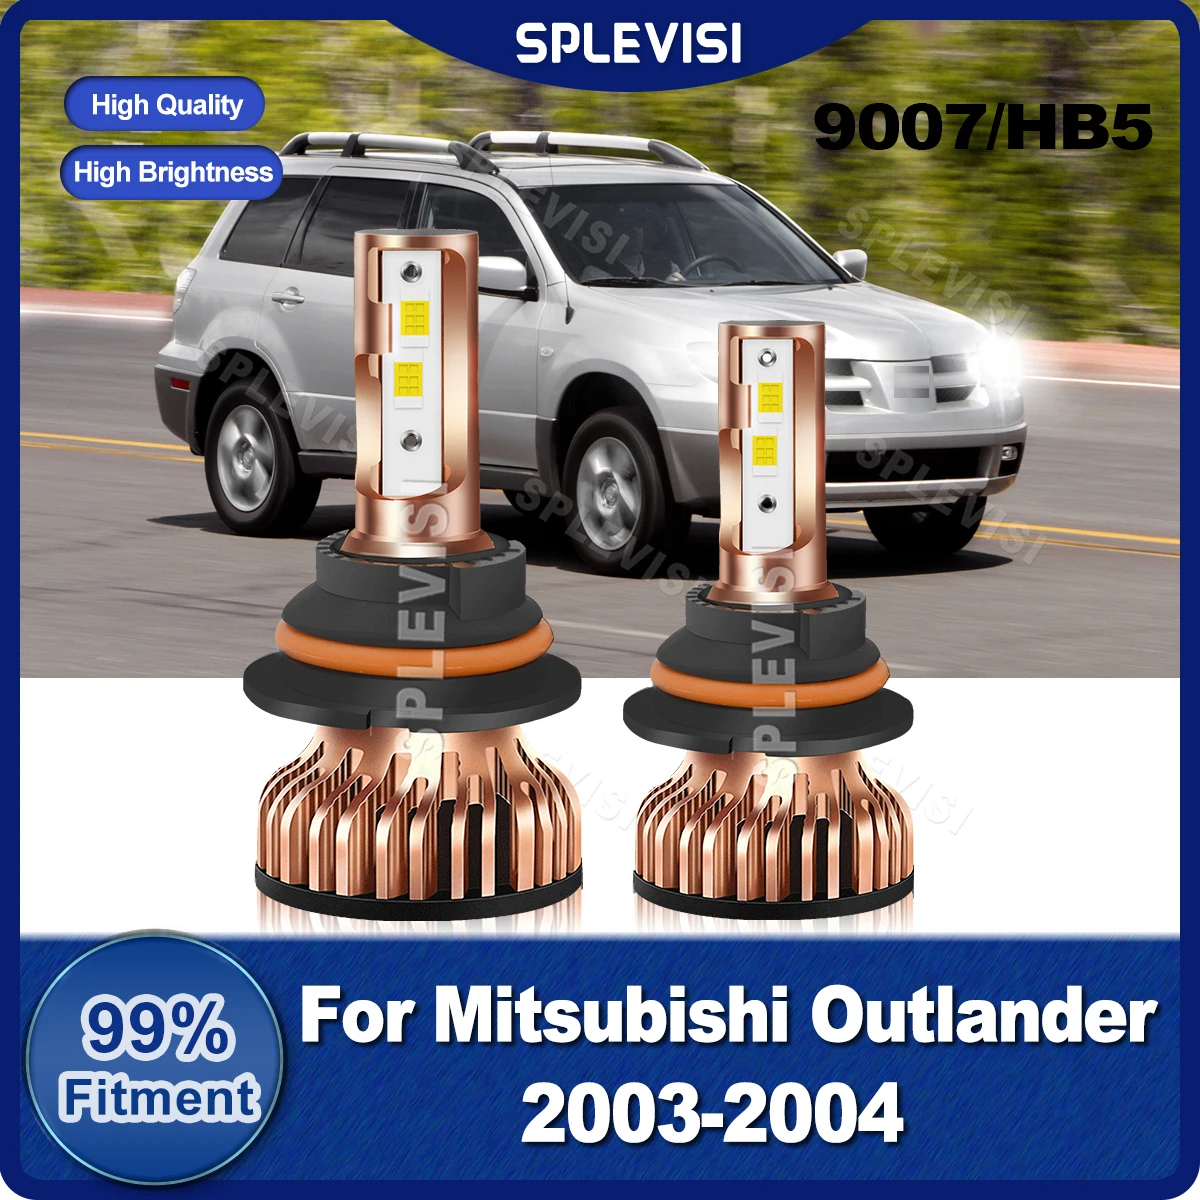 

2PCS 9007/HB5 LED Headlight High Low Beam HID White 9V-24V 360 Degree Beam For Mitsubishi Outlander 2003-2004